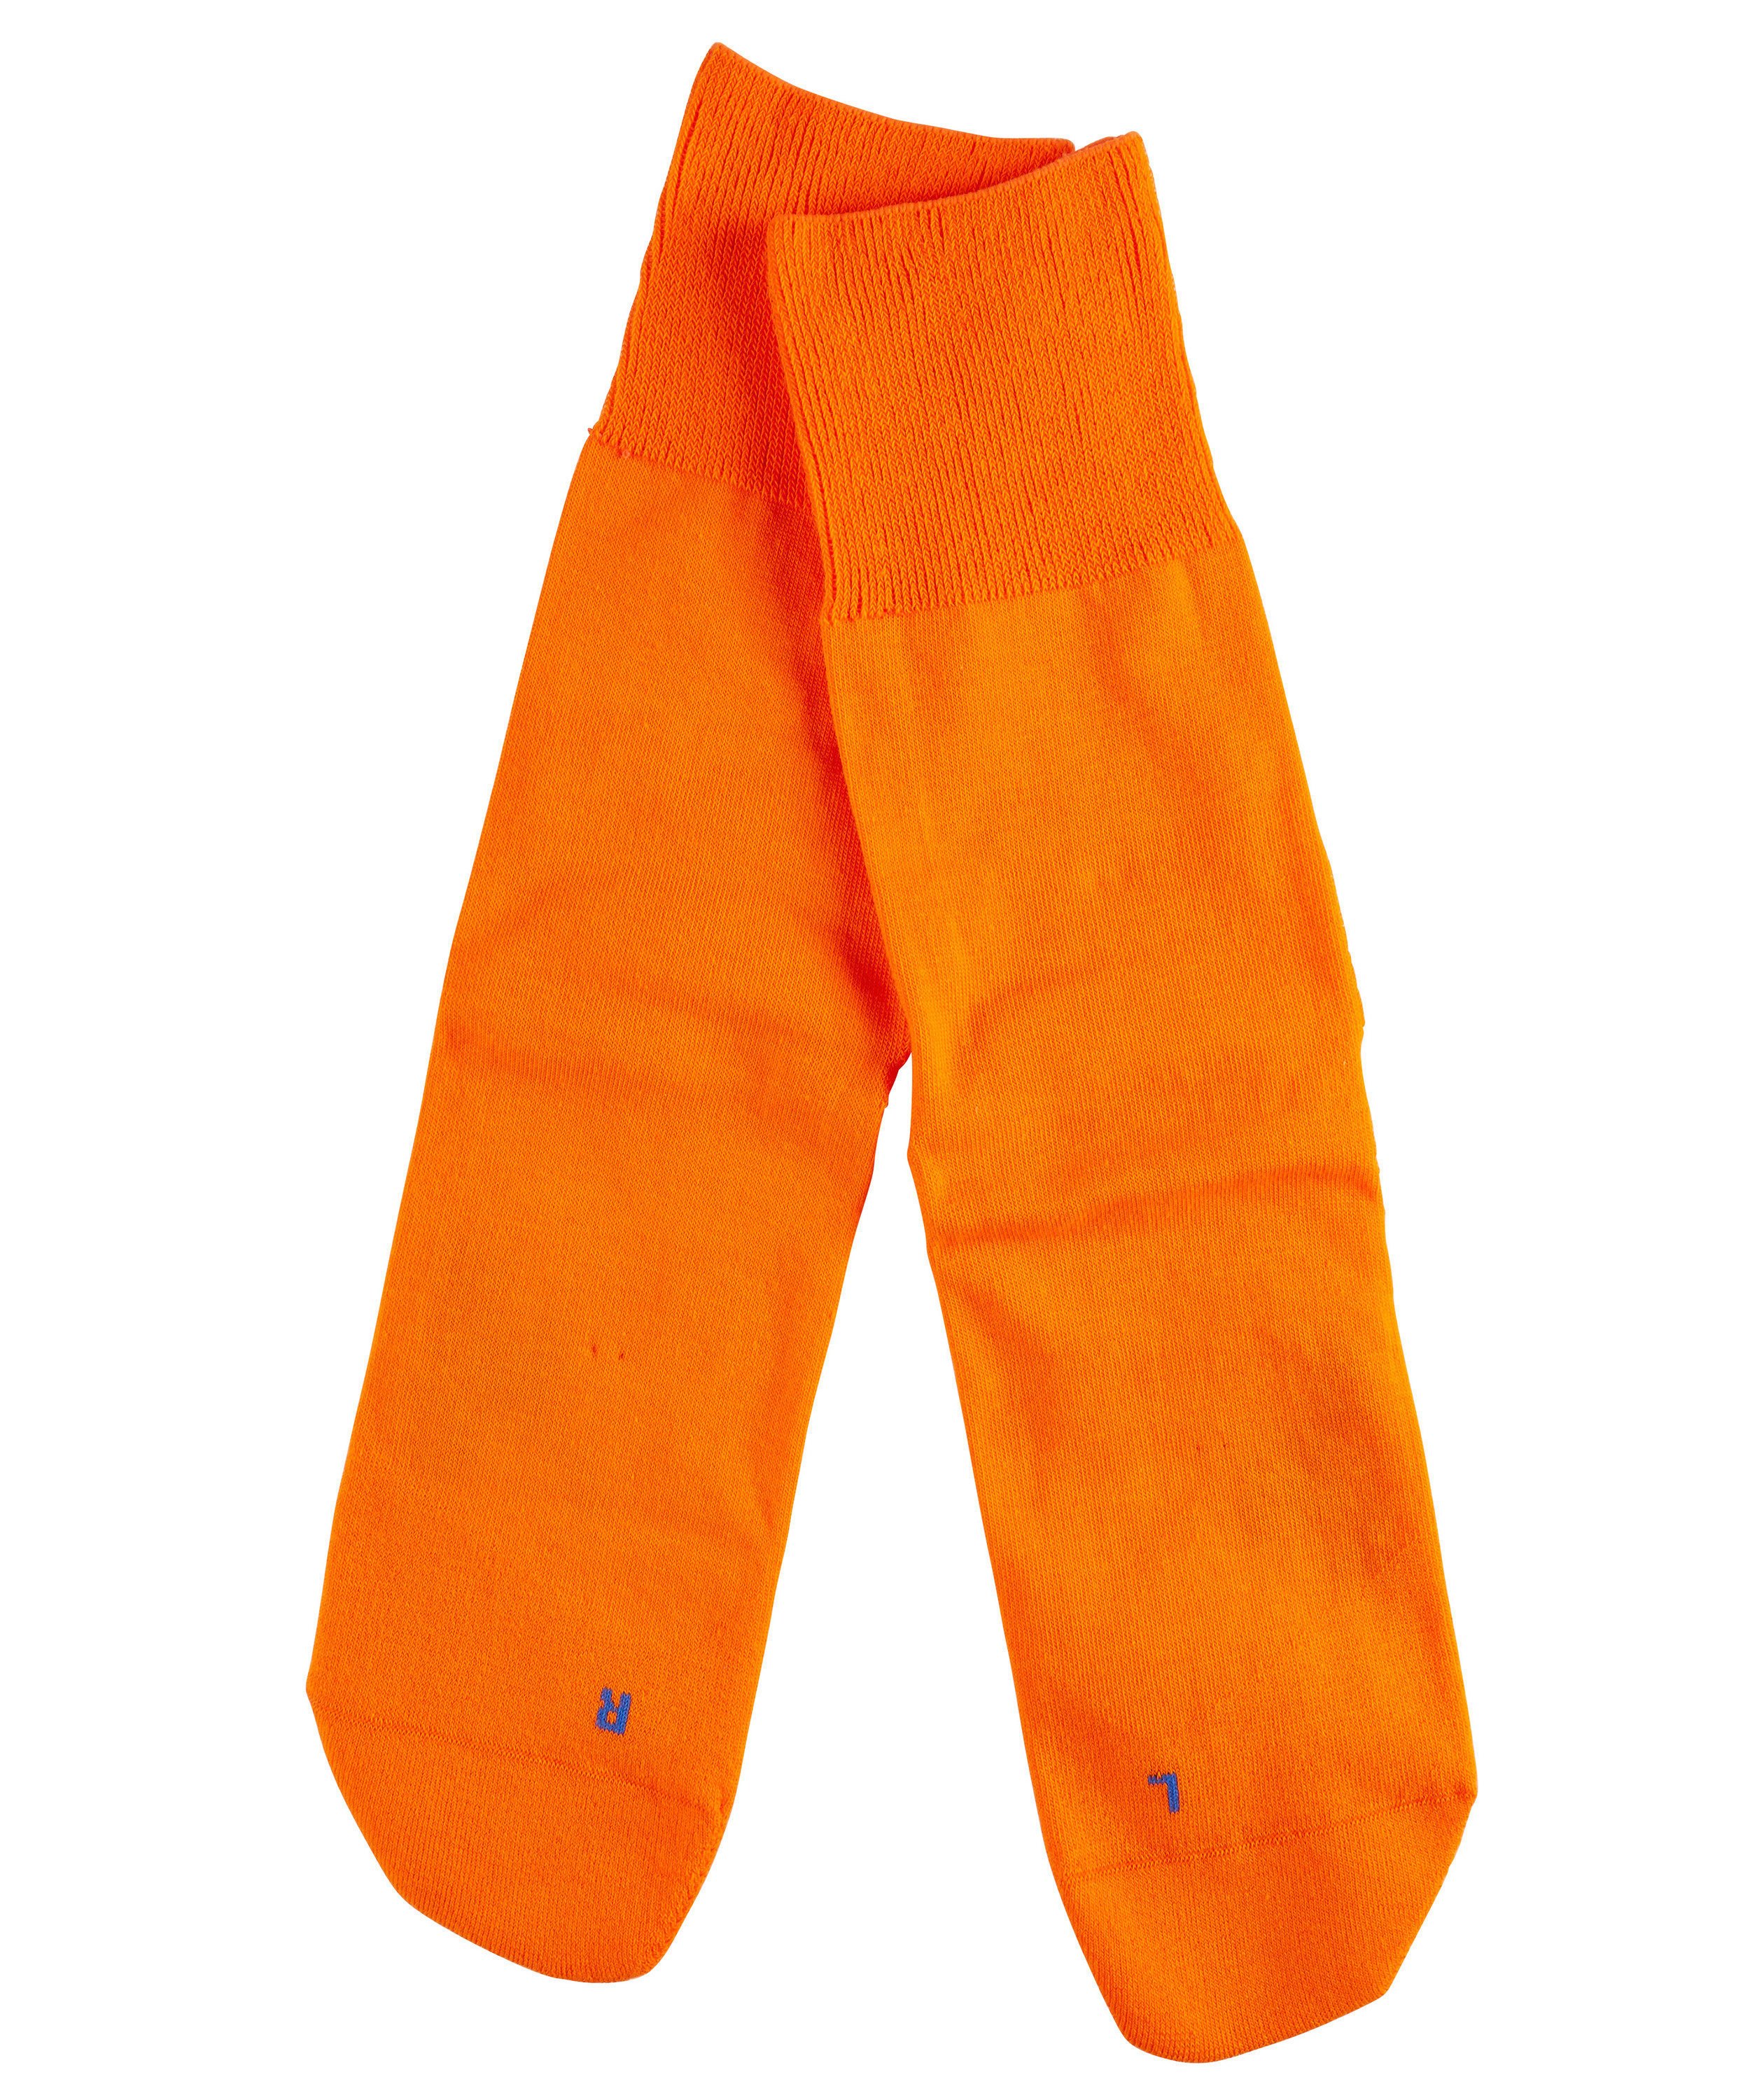 globaal piramide Vorige FALKE Run unisex sokken, oranje (bright orange) - Zomer SALE tot 50% korting